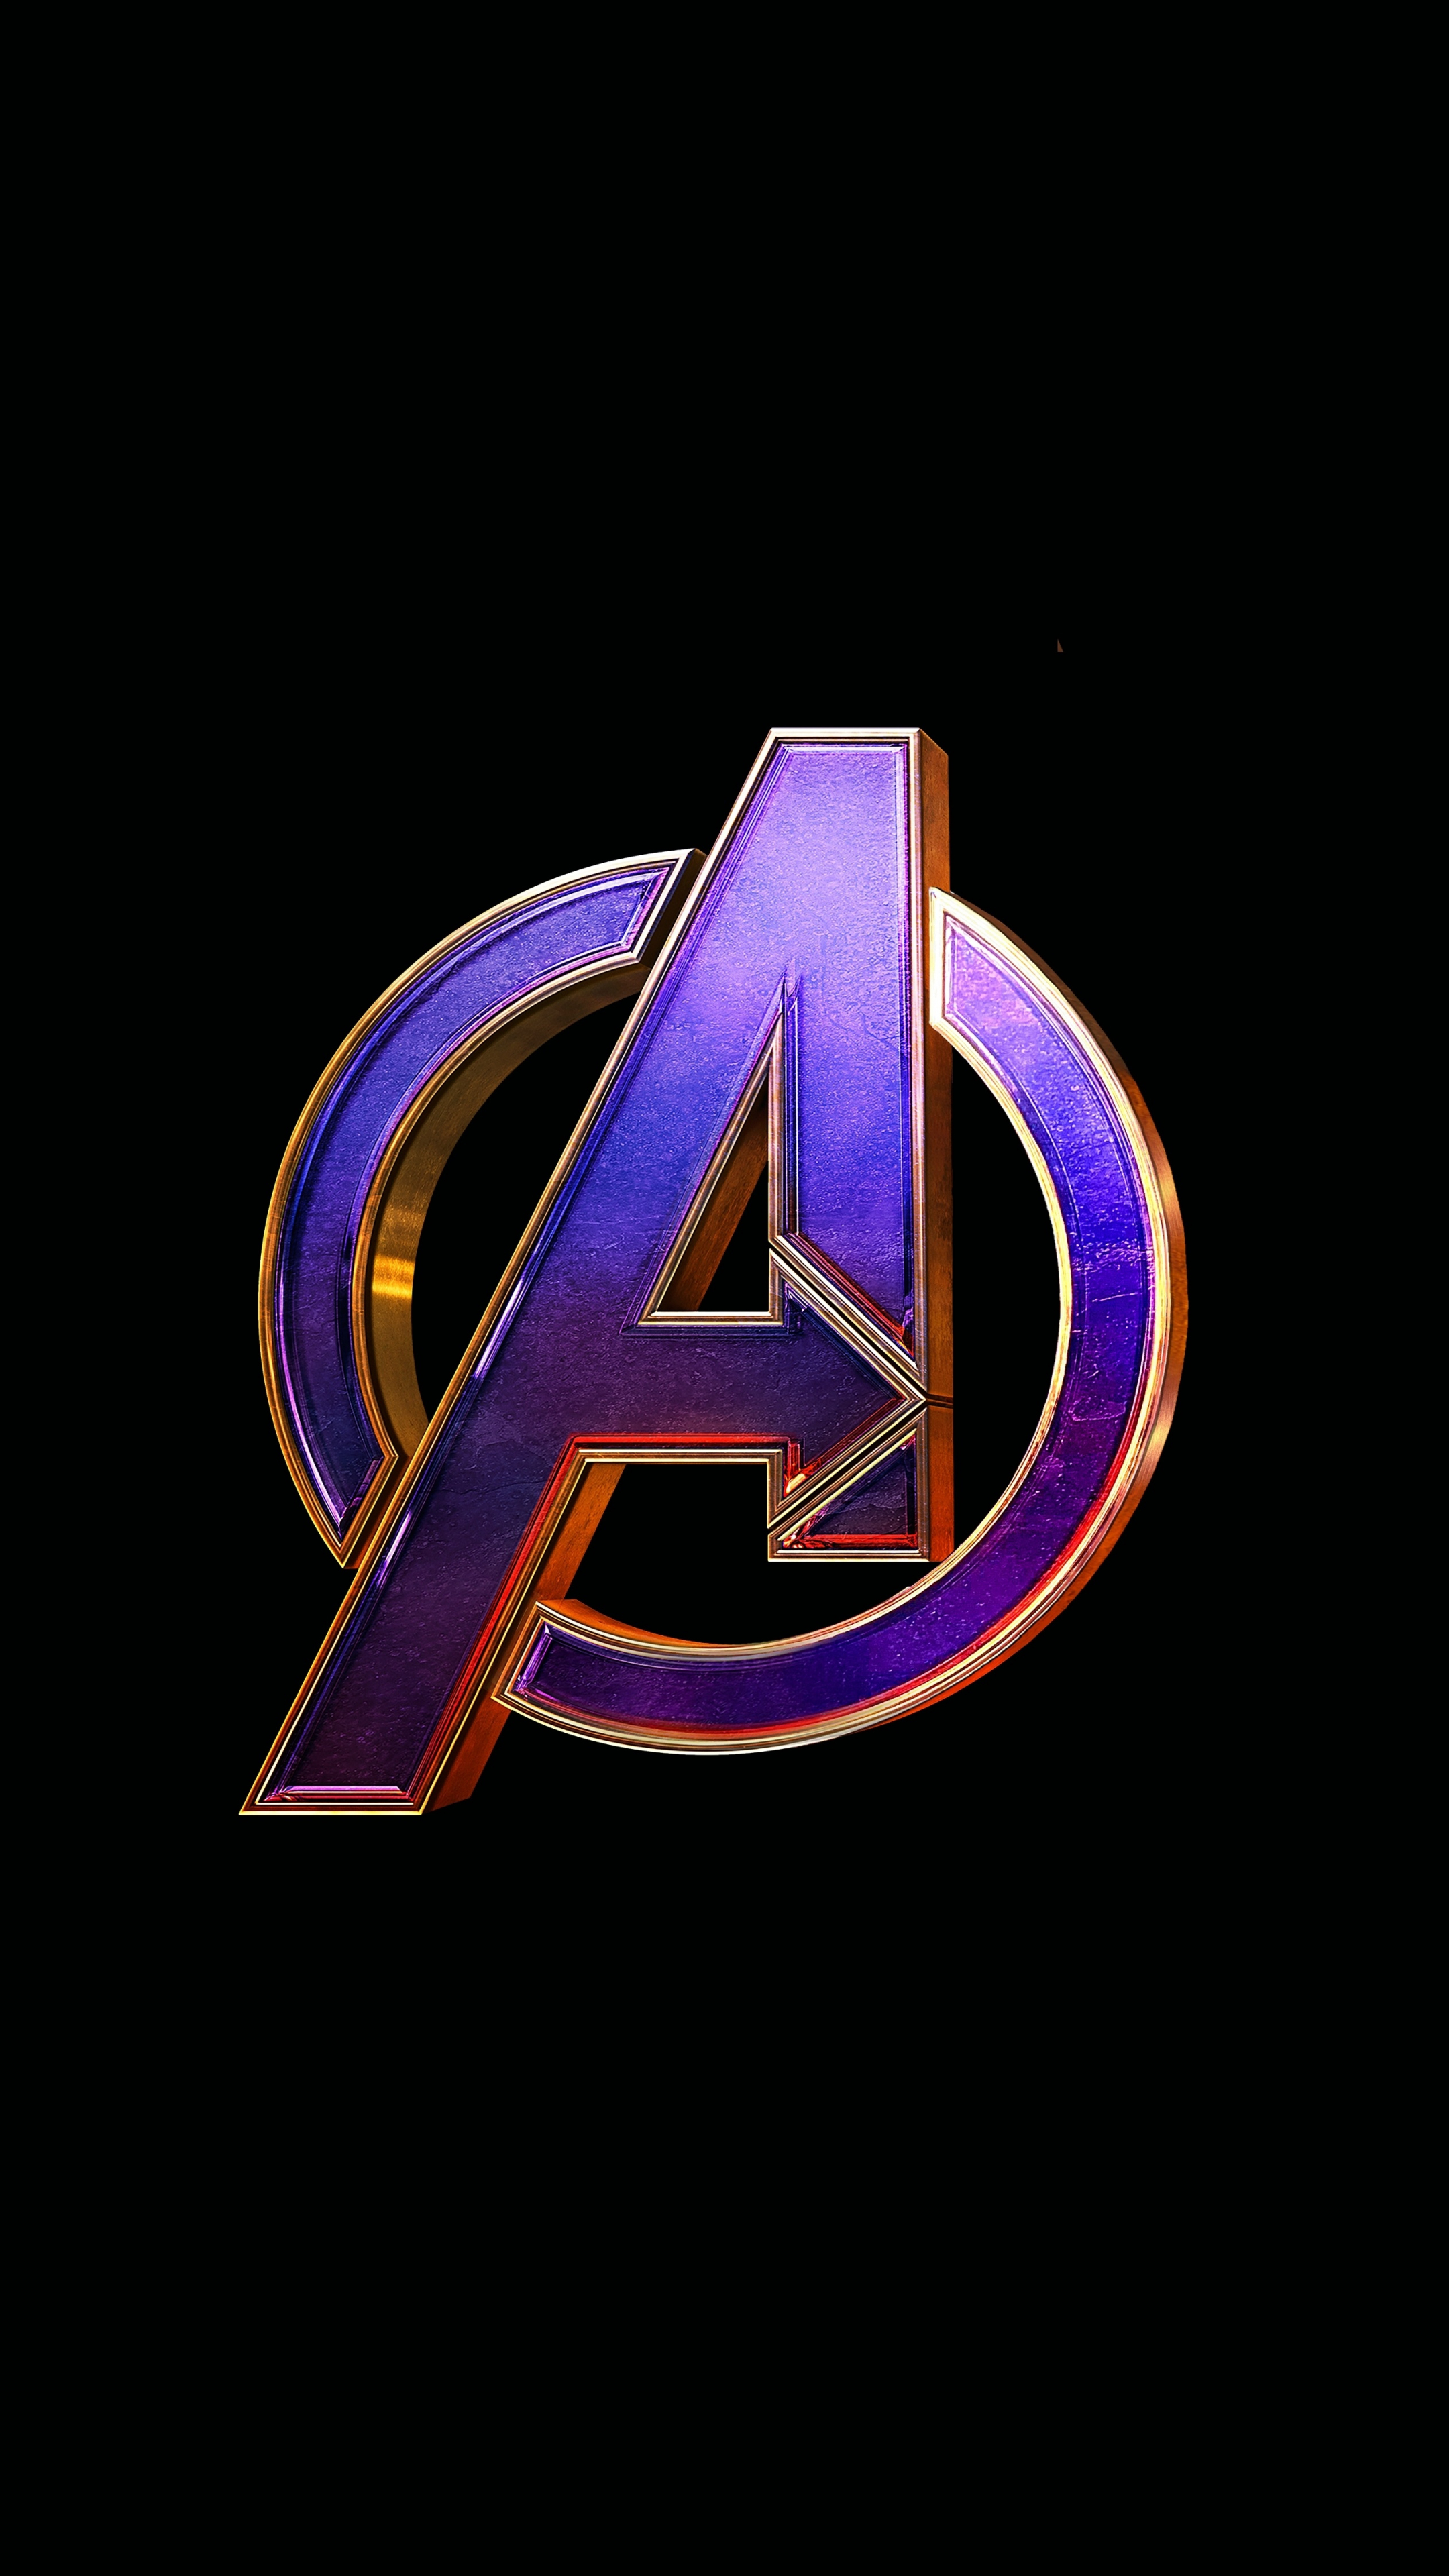 Download Wallpaper 2160x3840 Avengers Endgame Movie Logo 2160p Sony Xperia Z5 Premium Dual 2160x3840 Hd Background 787